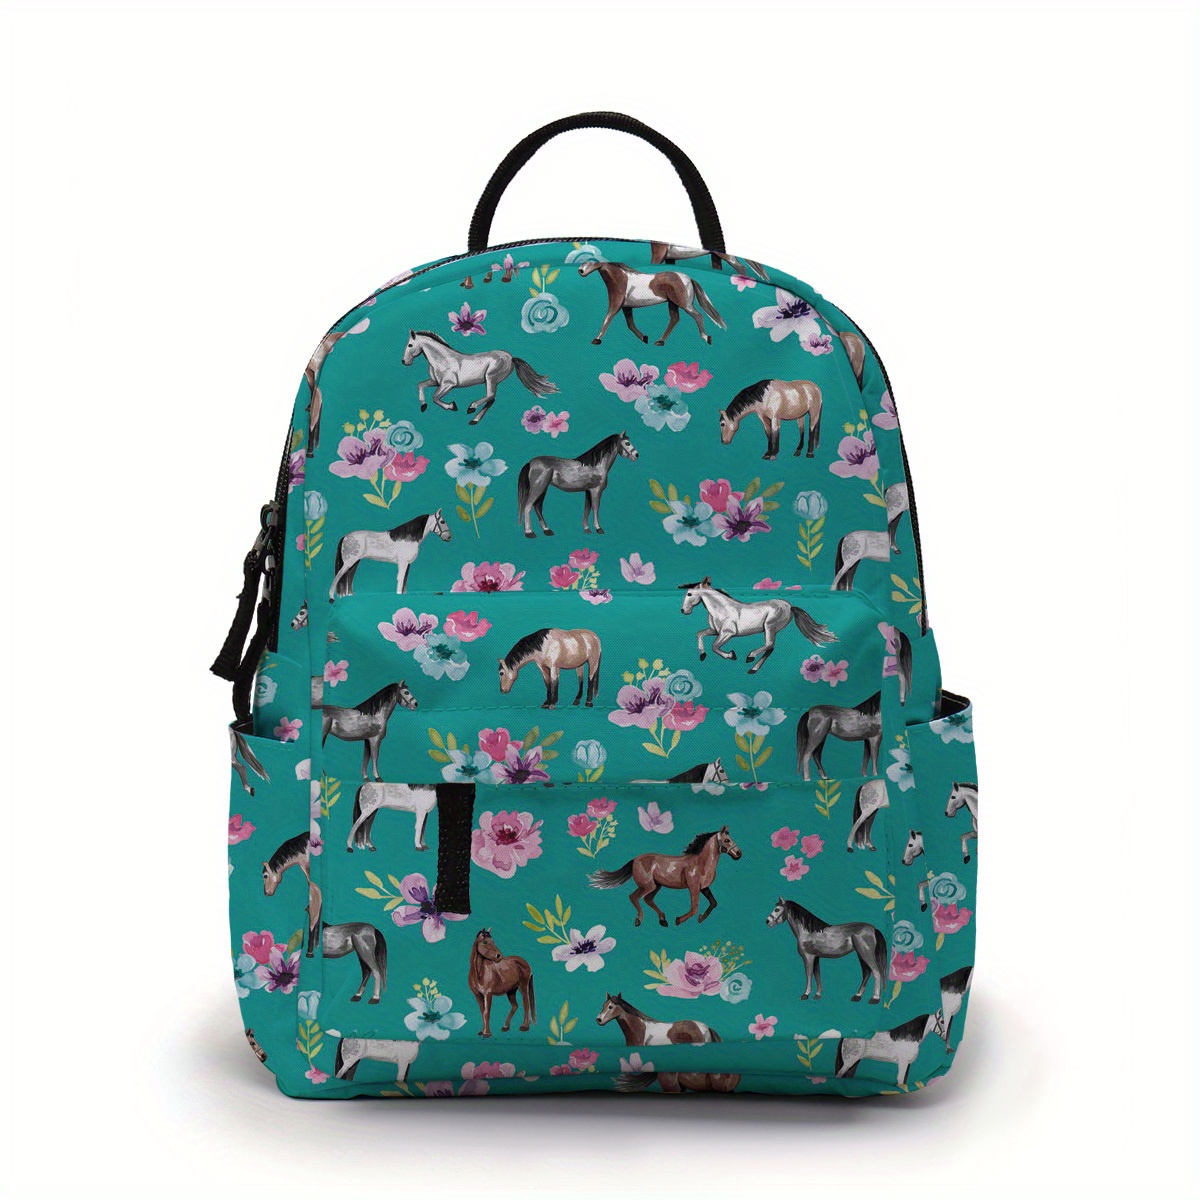 

Mini Backpack, Small Women's Campus School Bag, Cute Horse Backpack